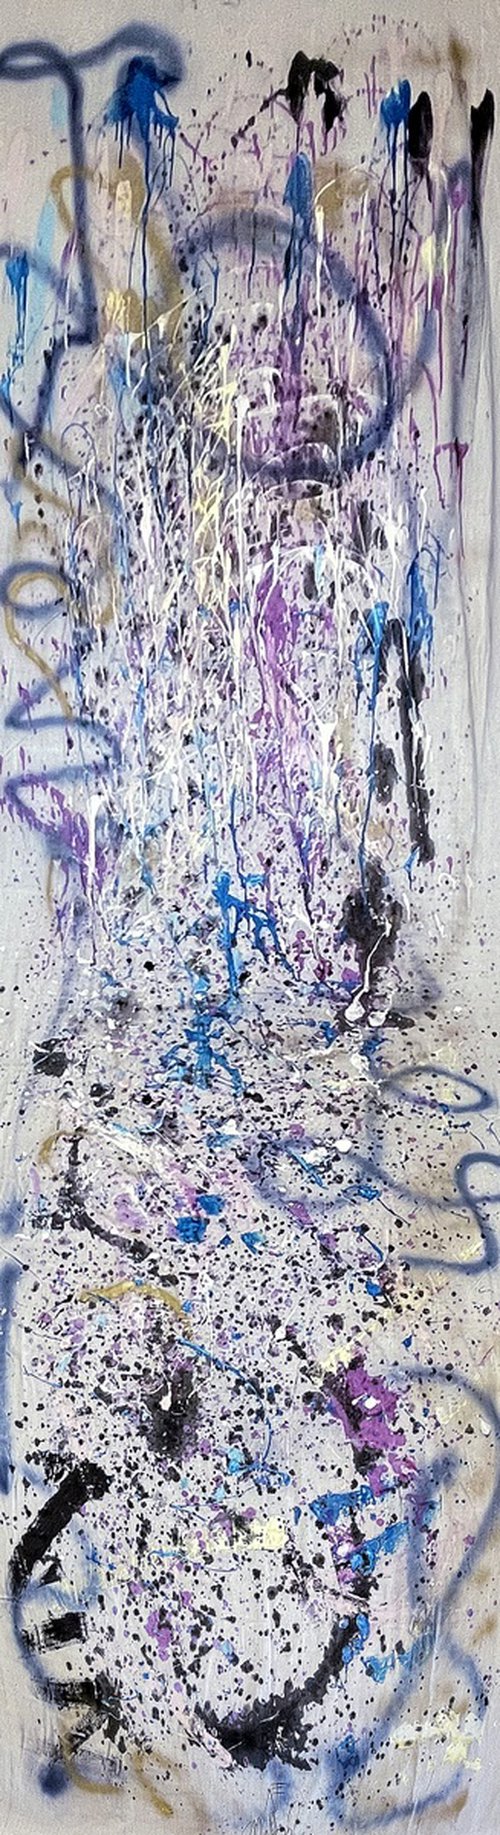 Pollock by Mattia Paoli